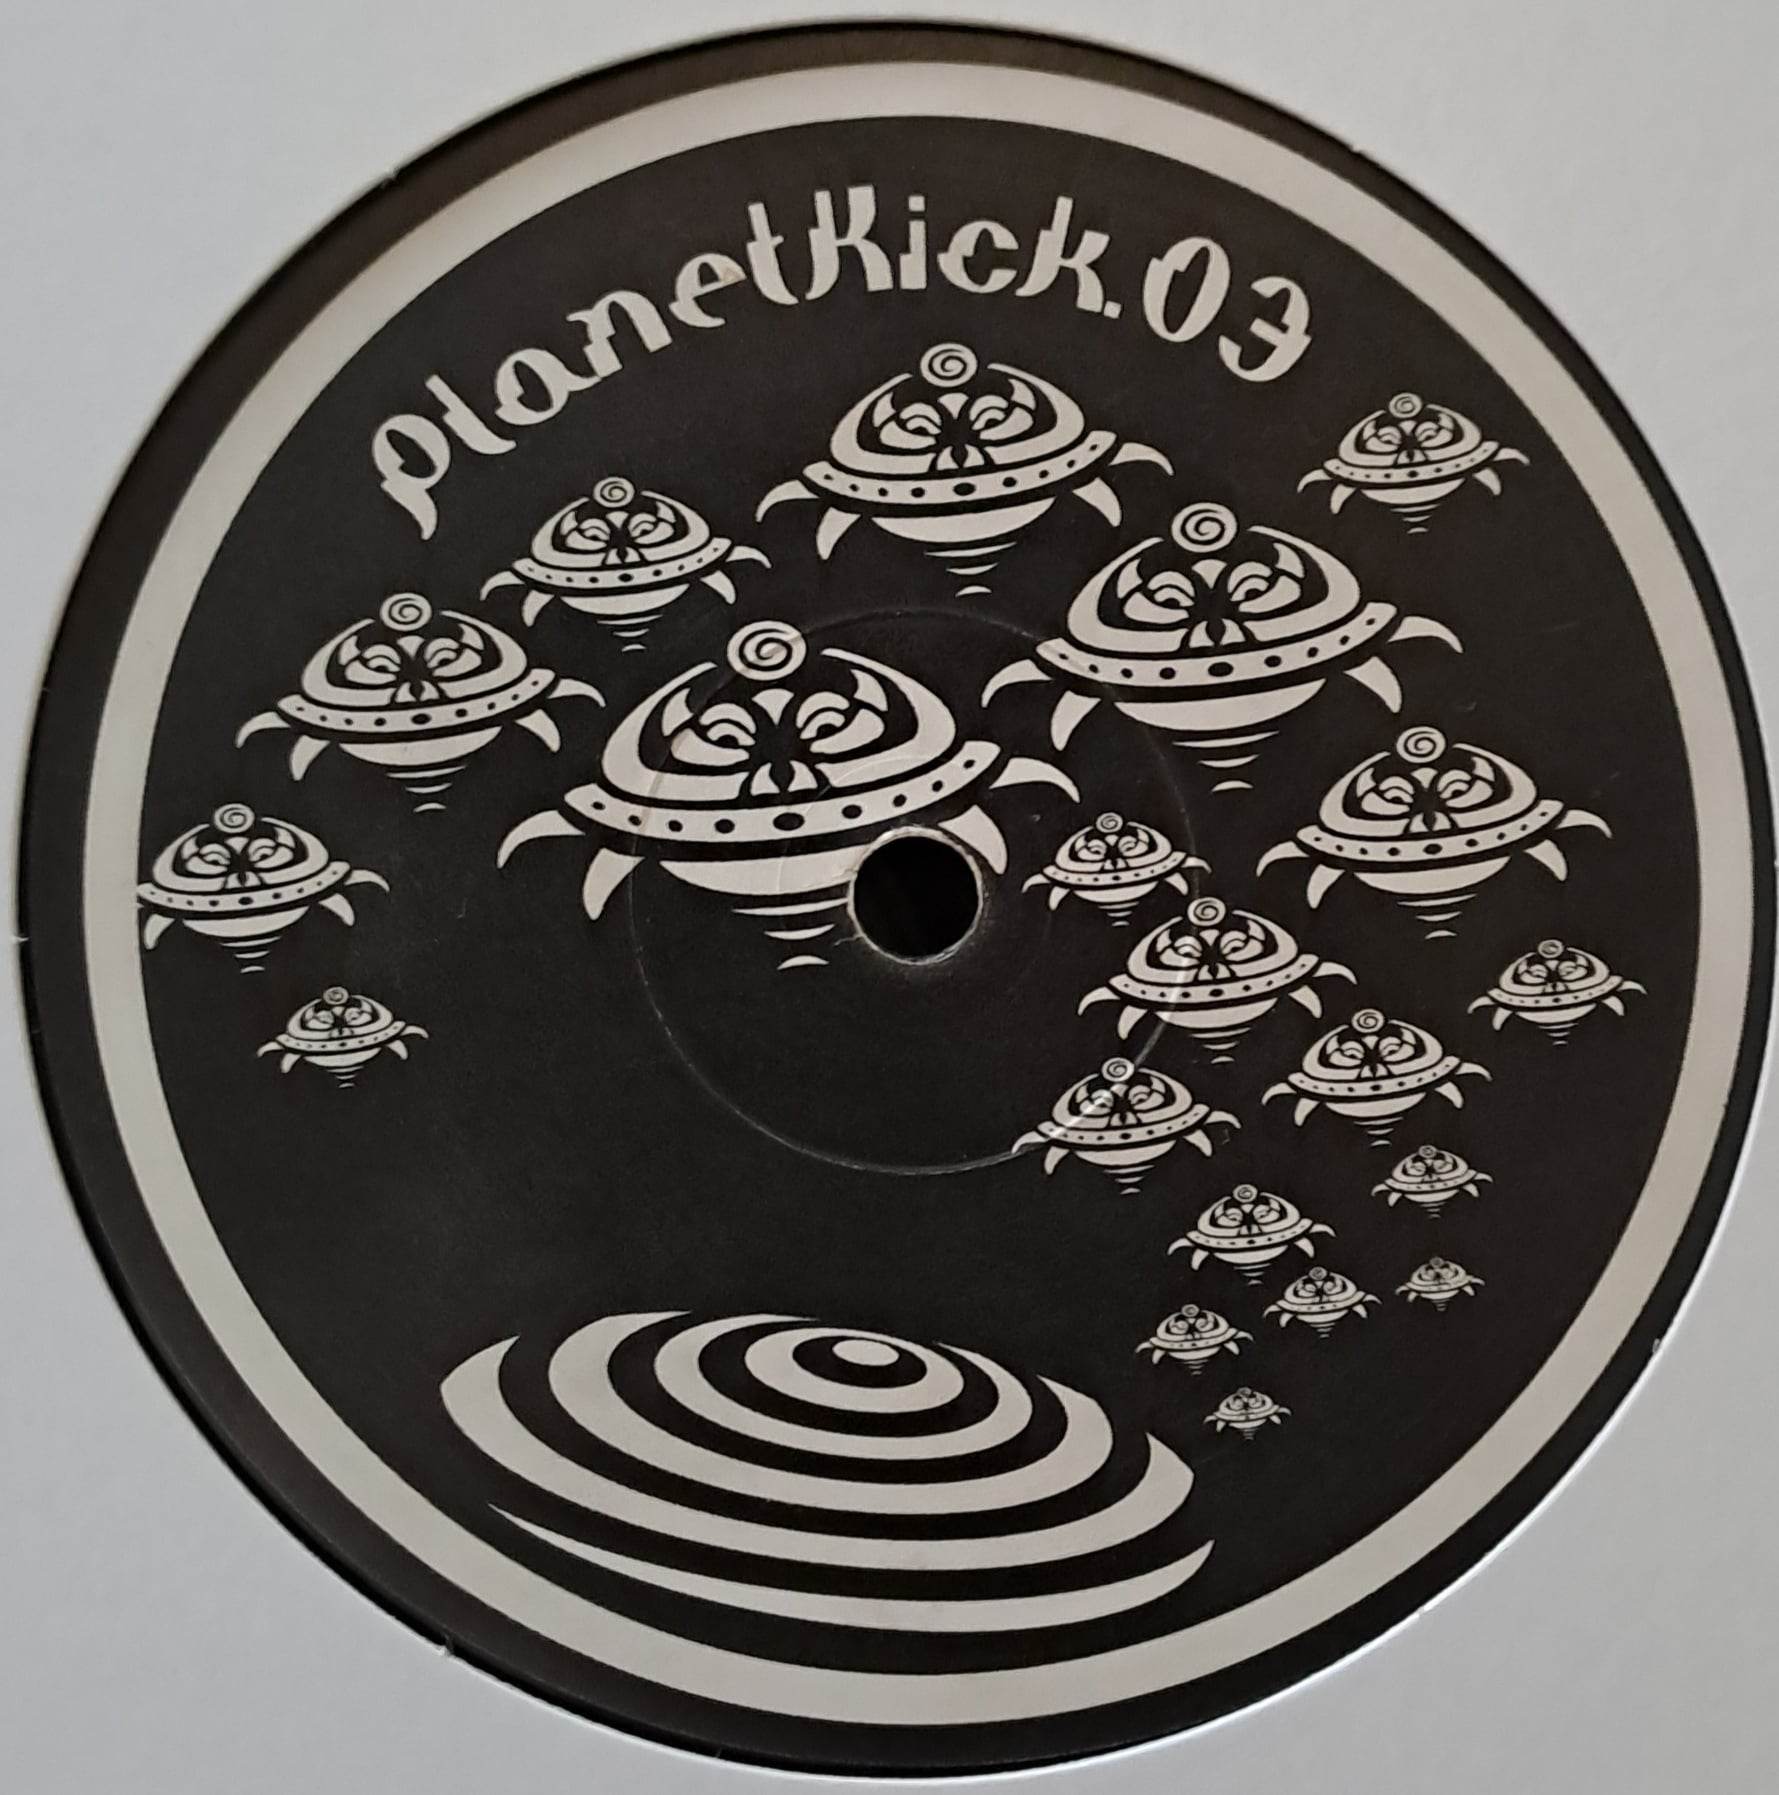 Planet Kick 03 - vinyle tribecore